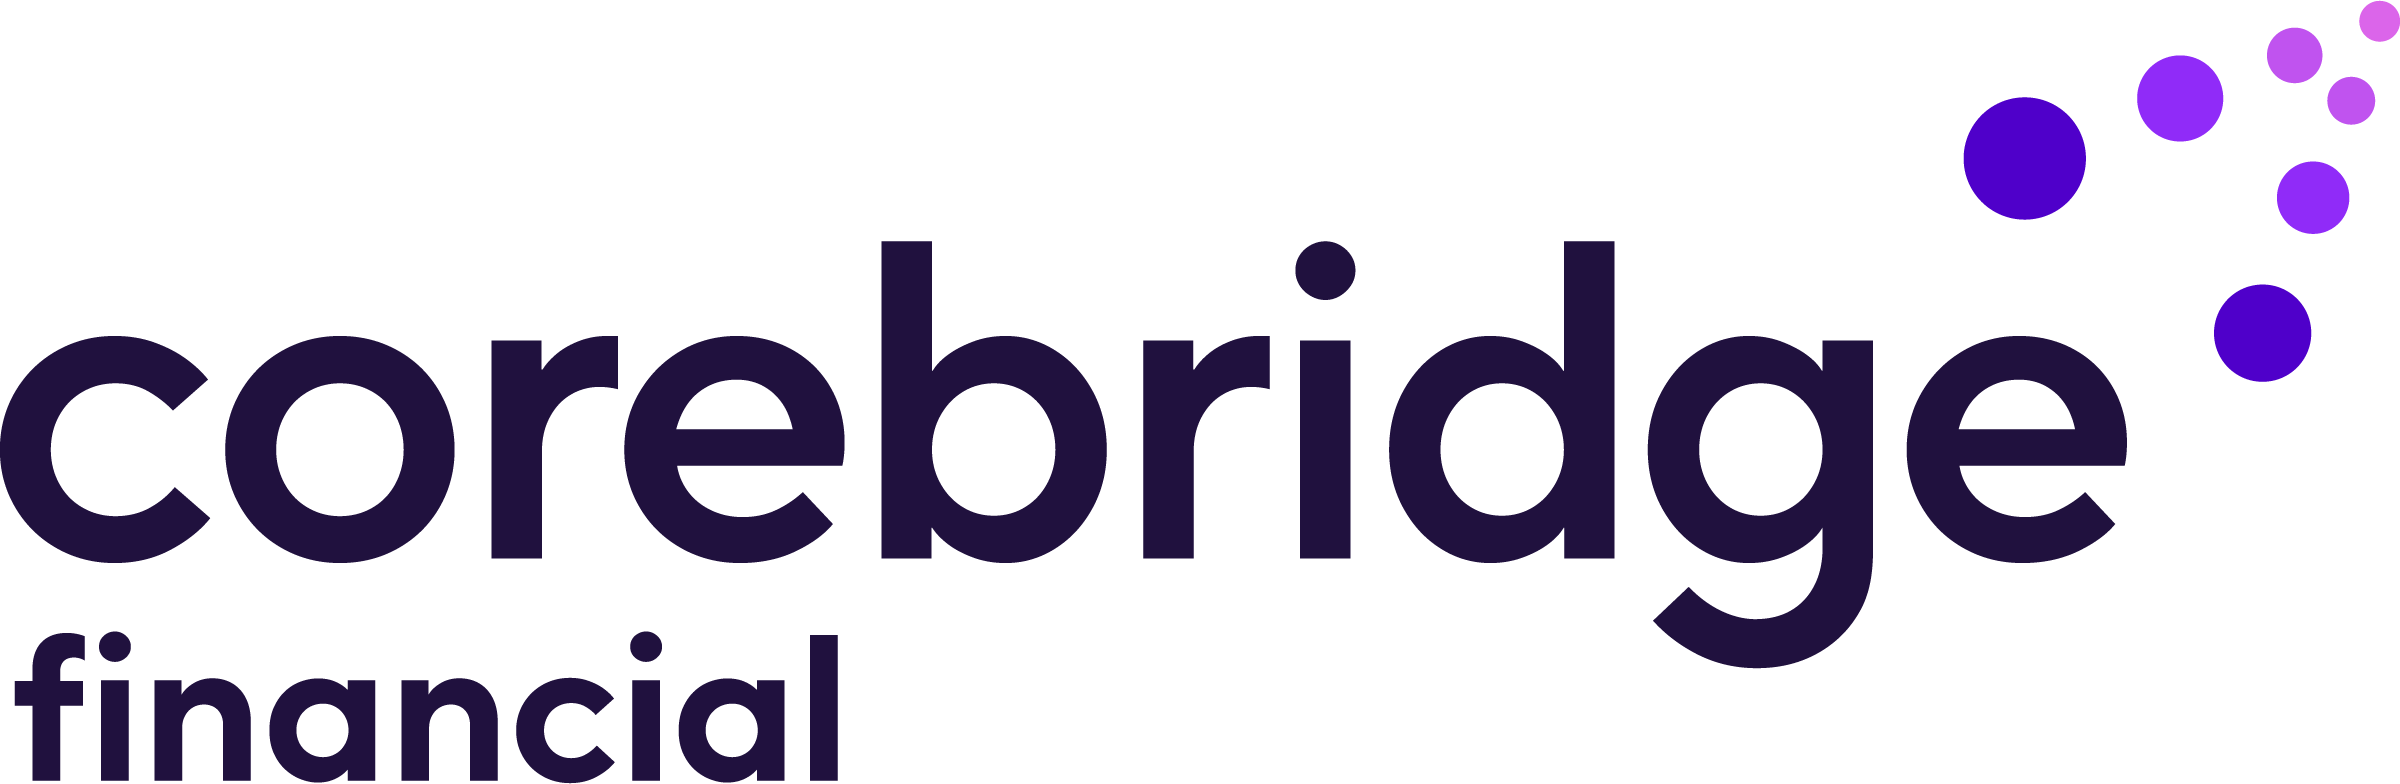 Corebridge Logo